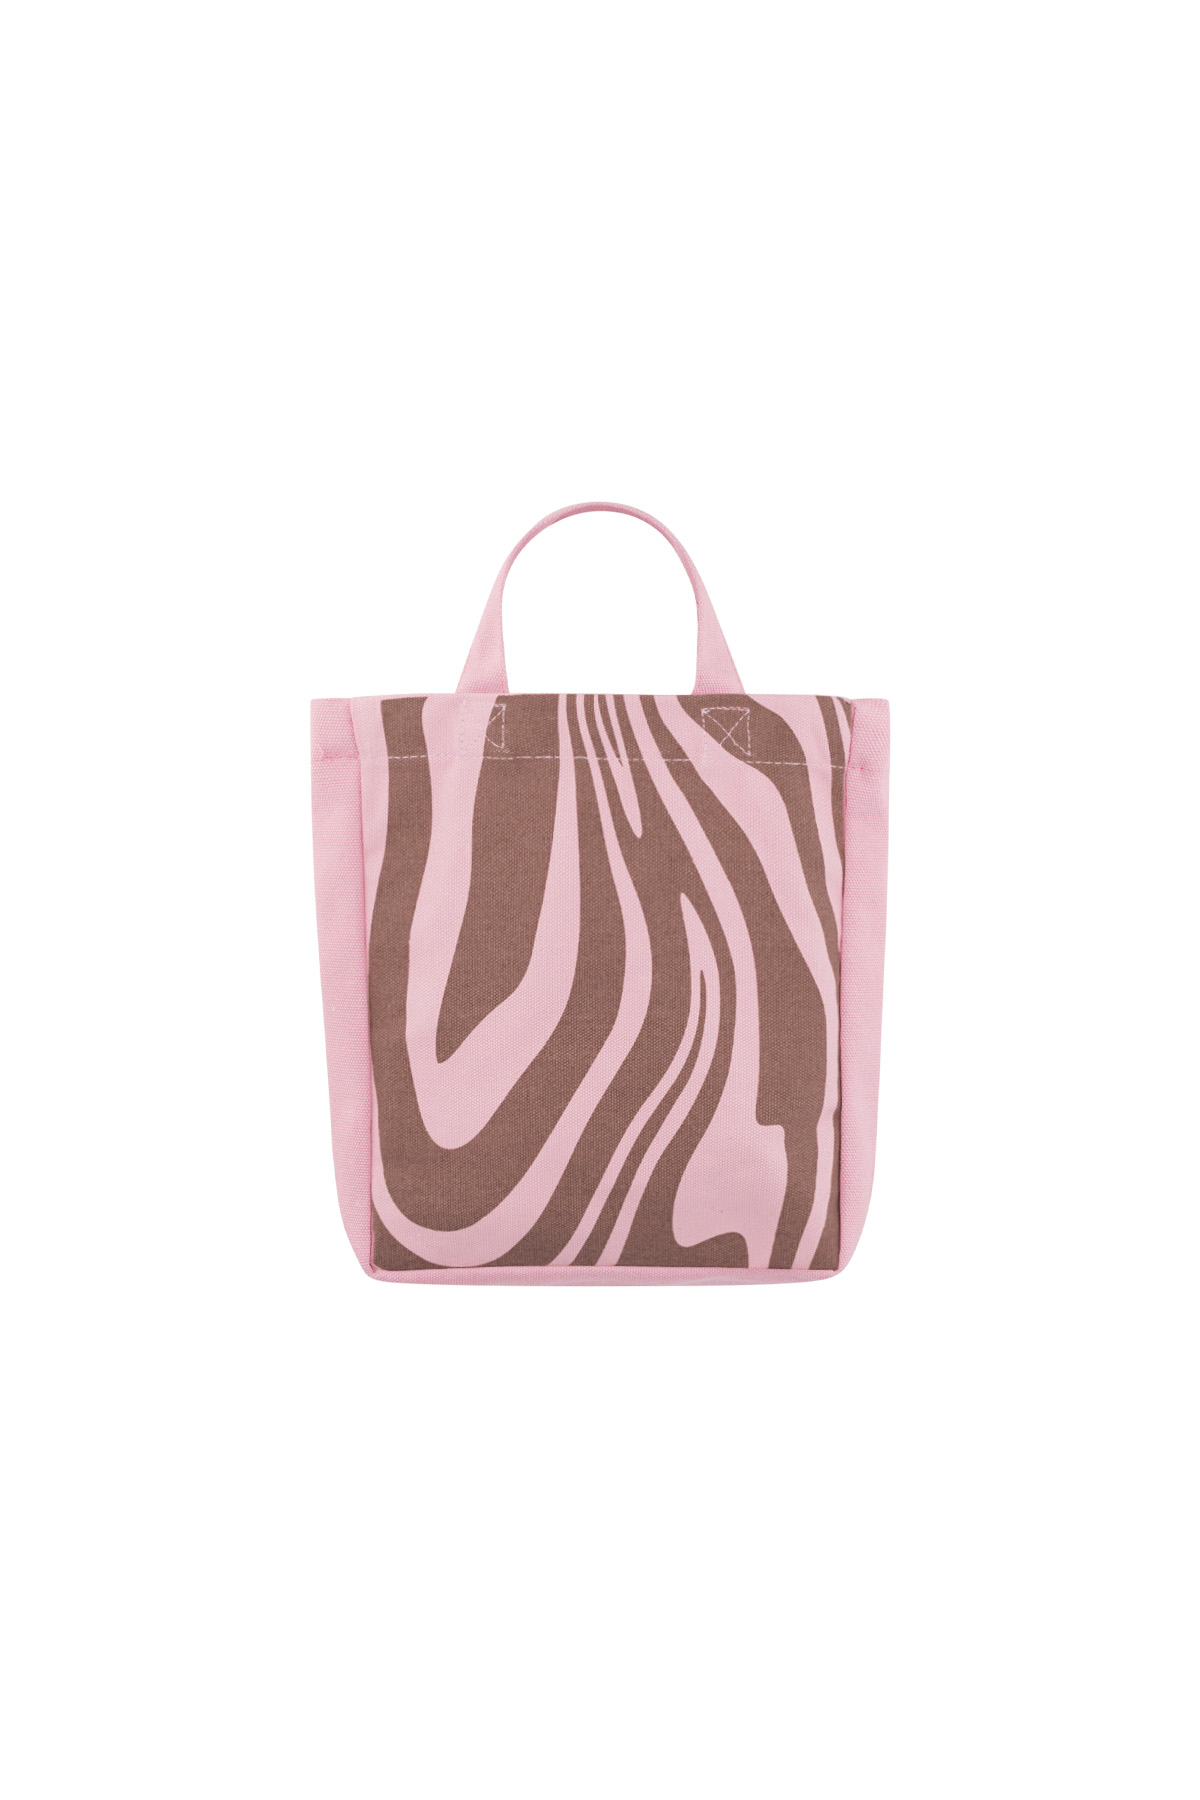 Borsa piccola in tela zebrata - rosa marrone h5 